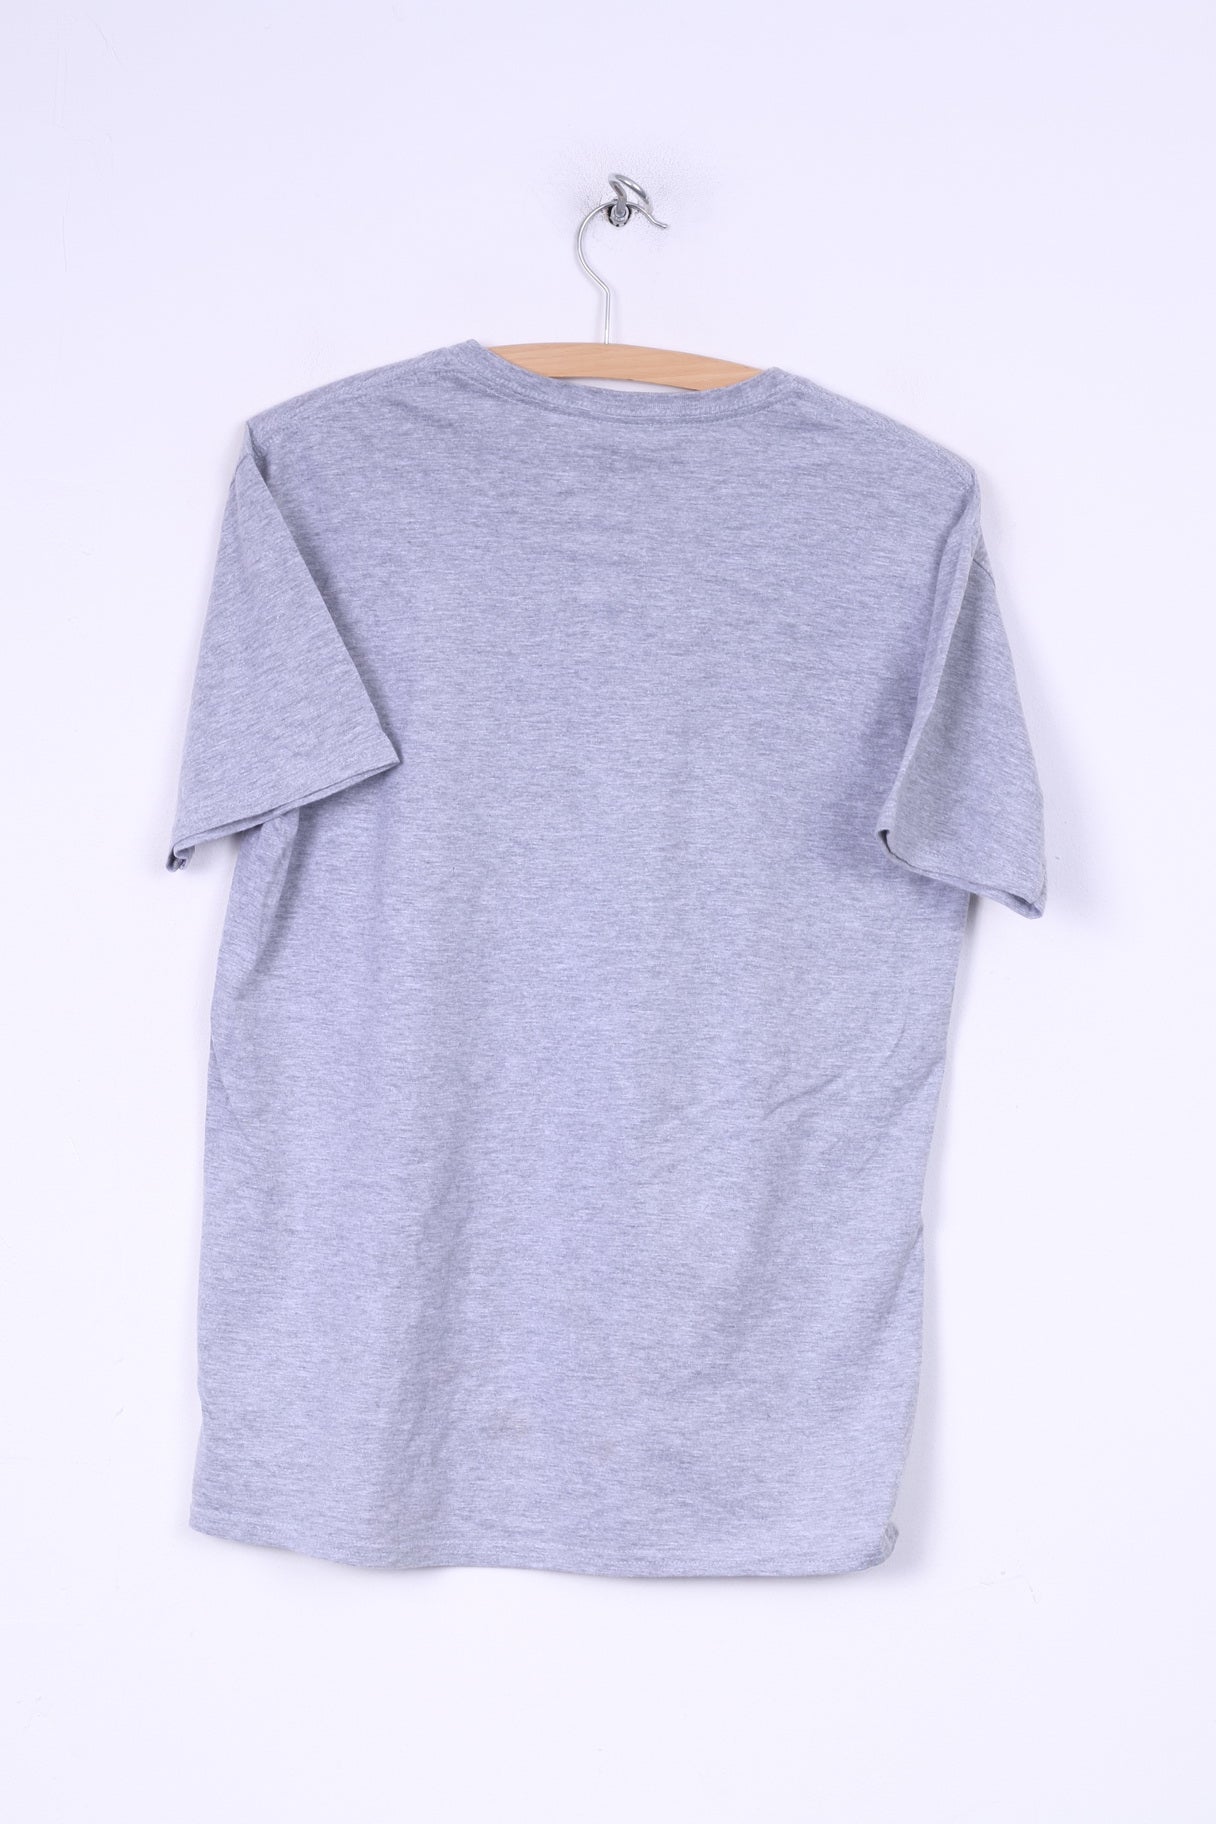 Gildan Heavy Cotton Mens M(S) T-Shirt V Neck Grey Graphic Live Fast Cause It Wont Last Summer Top